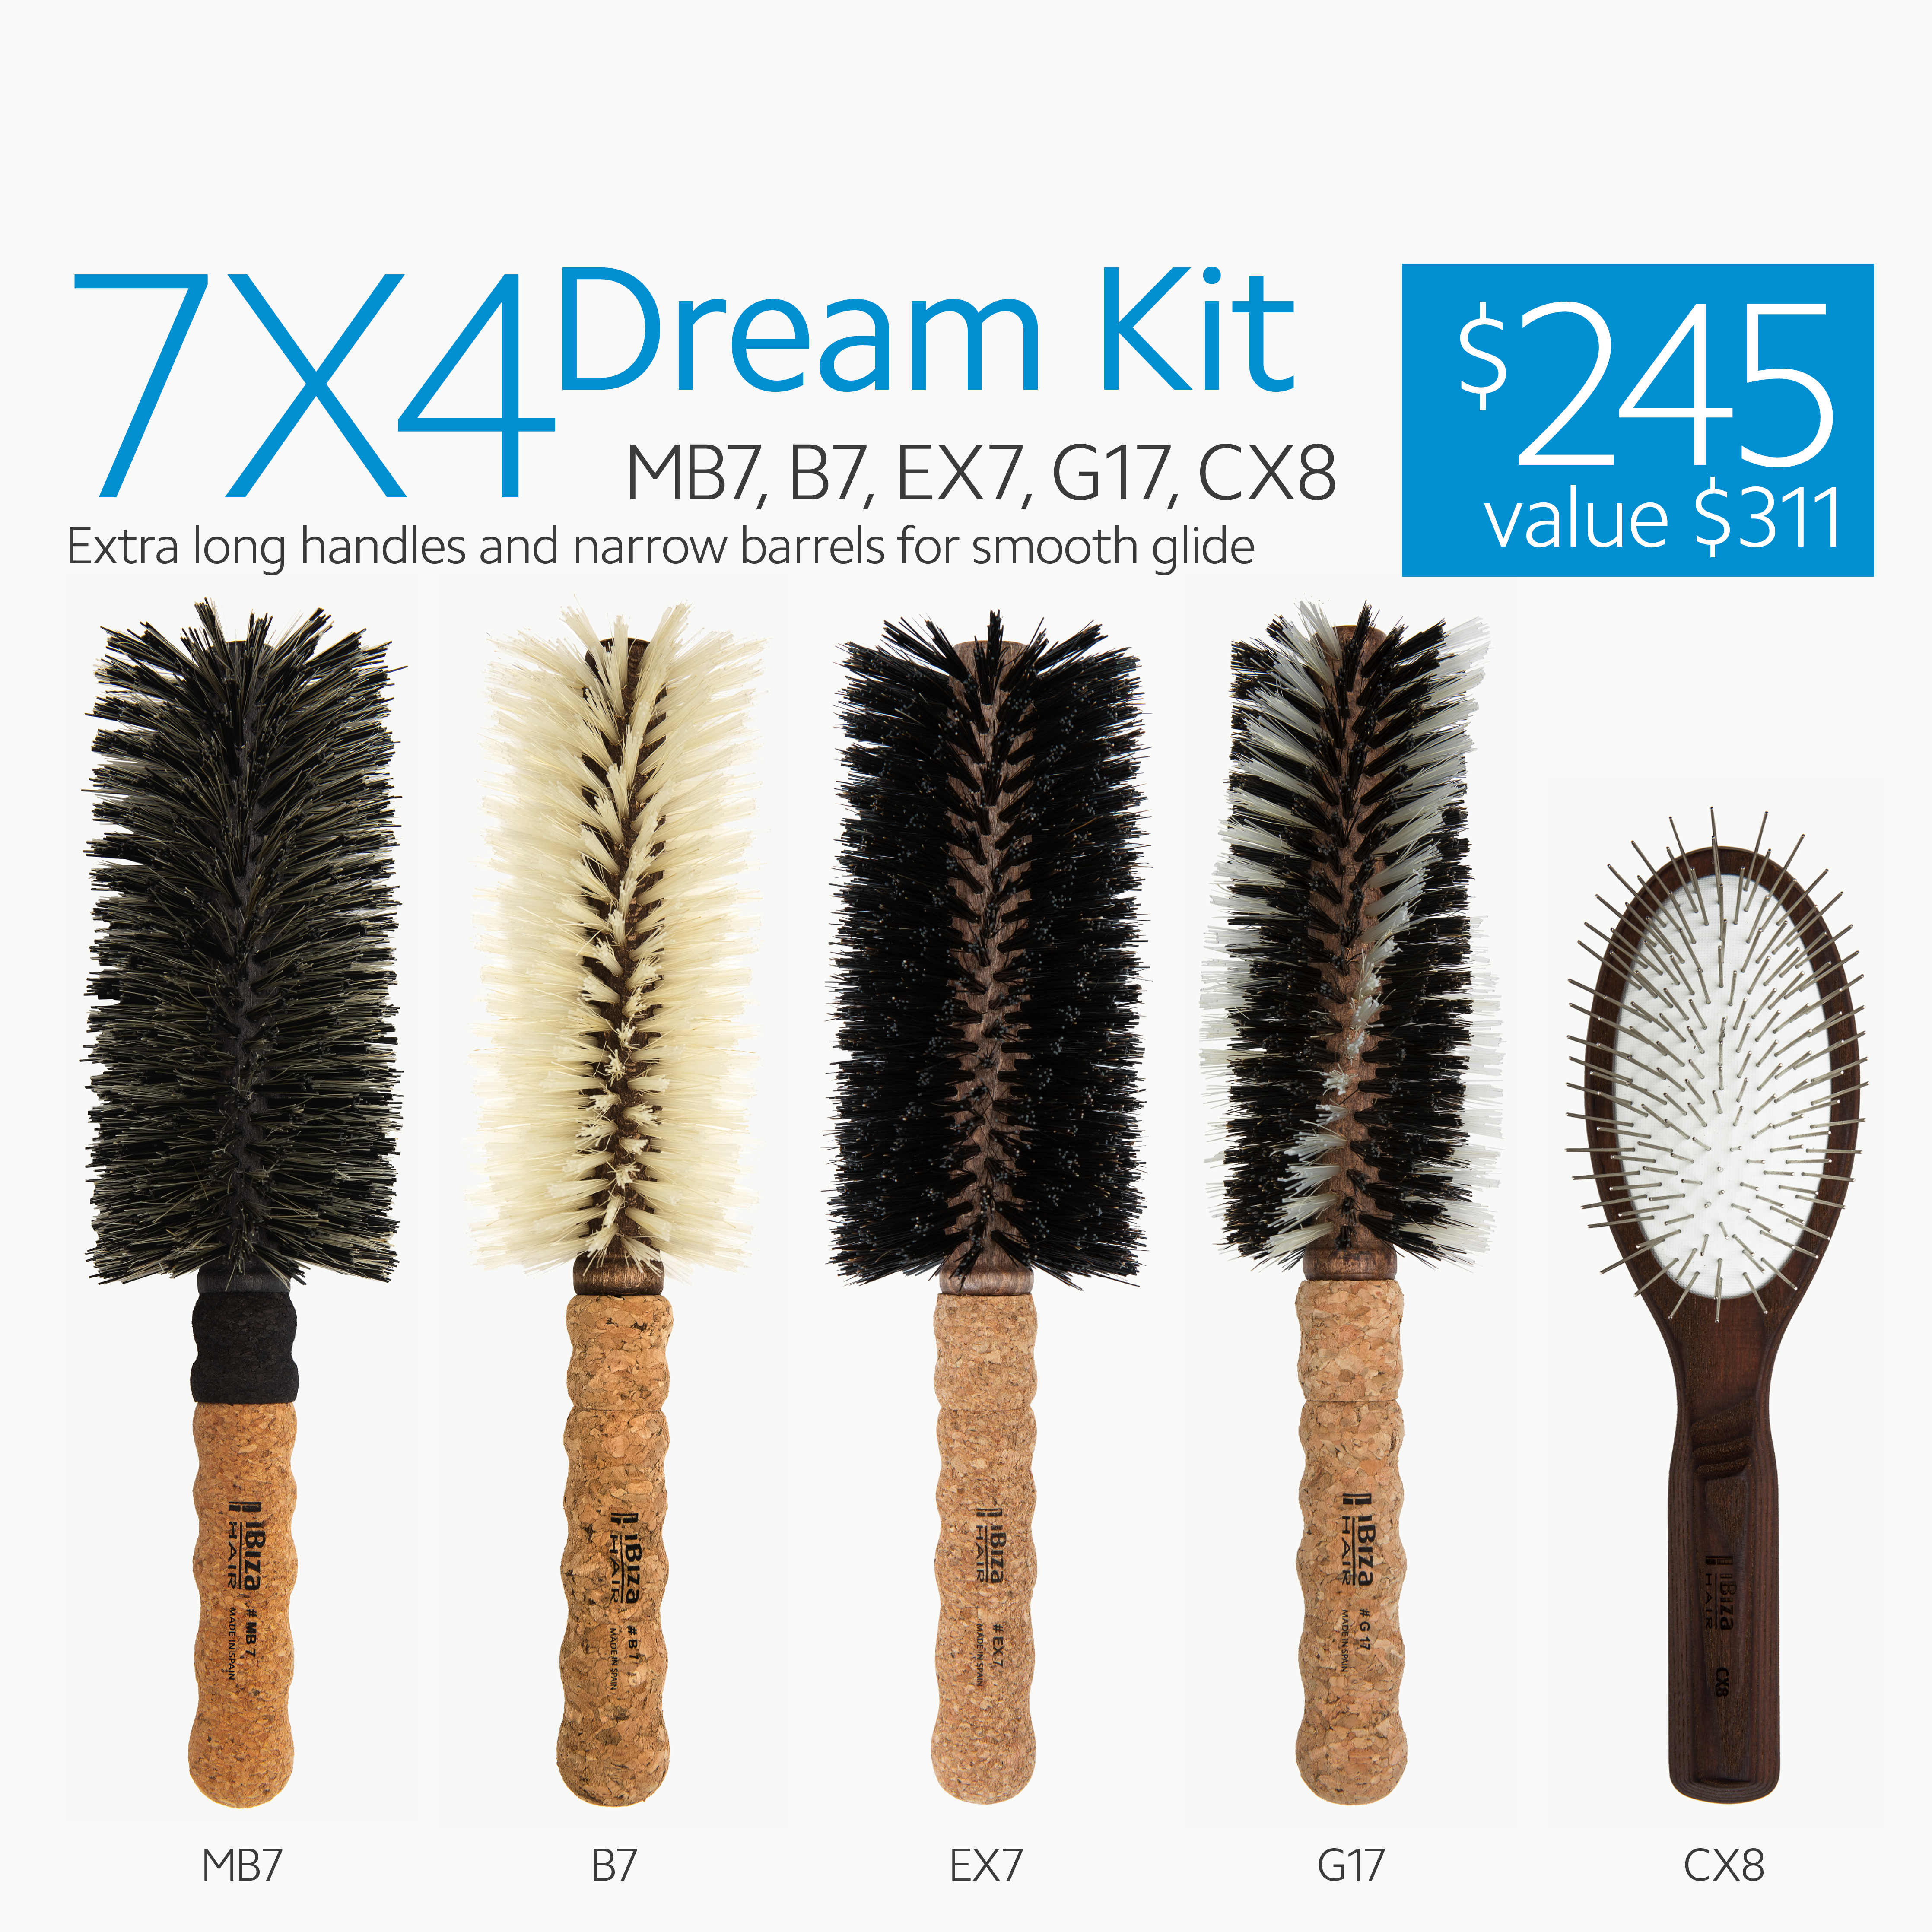 7X4 Dream Kit